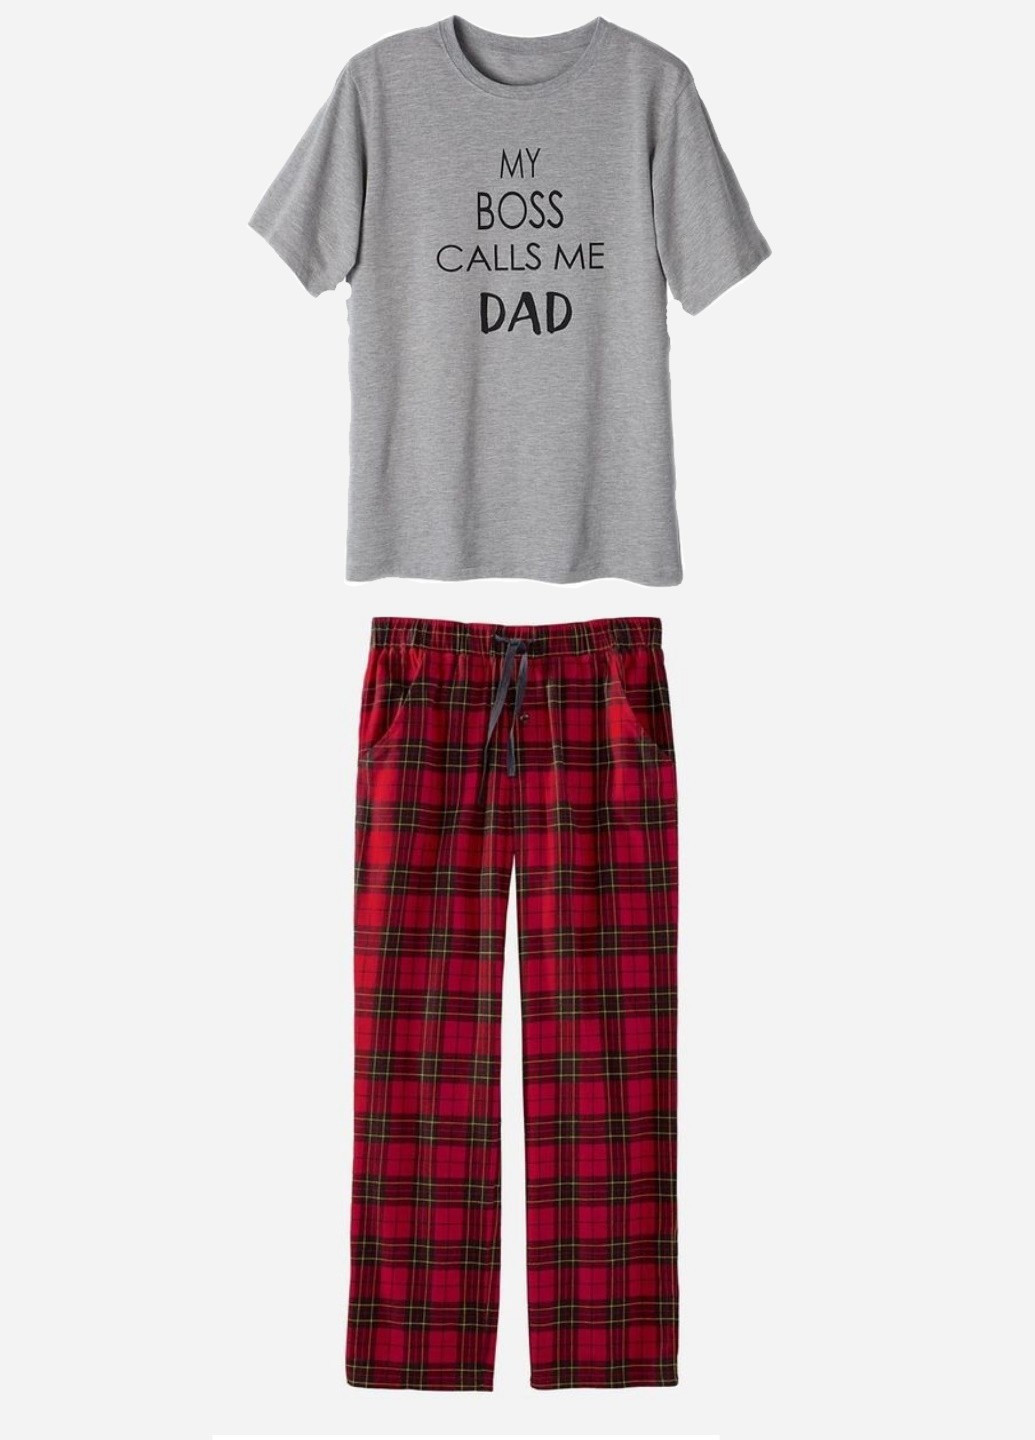 Пижама (футболка, брюки) Avon футболка + брюки клетка комбинированная домашняя хлопок, трикотаж, байка